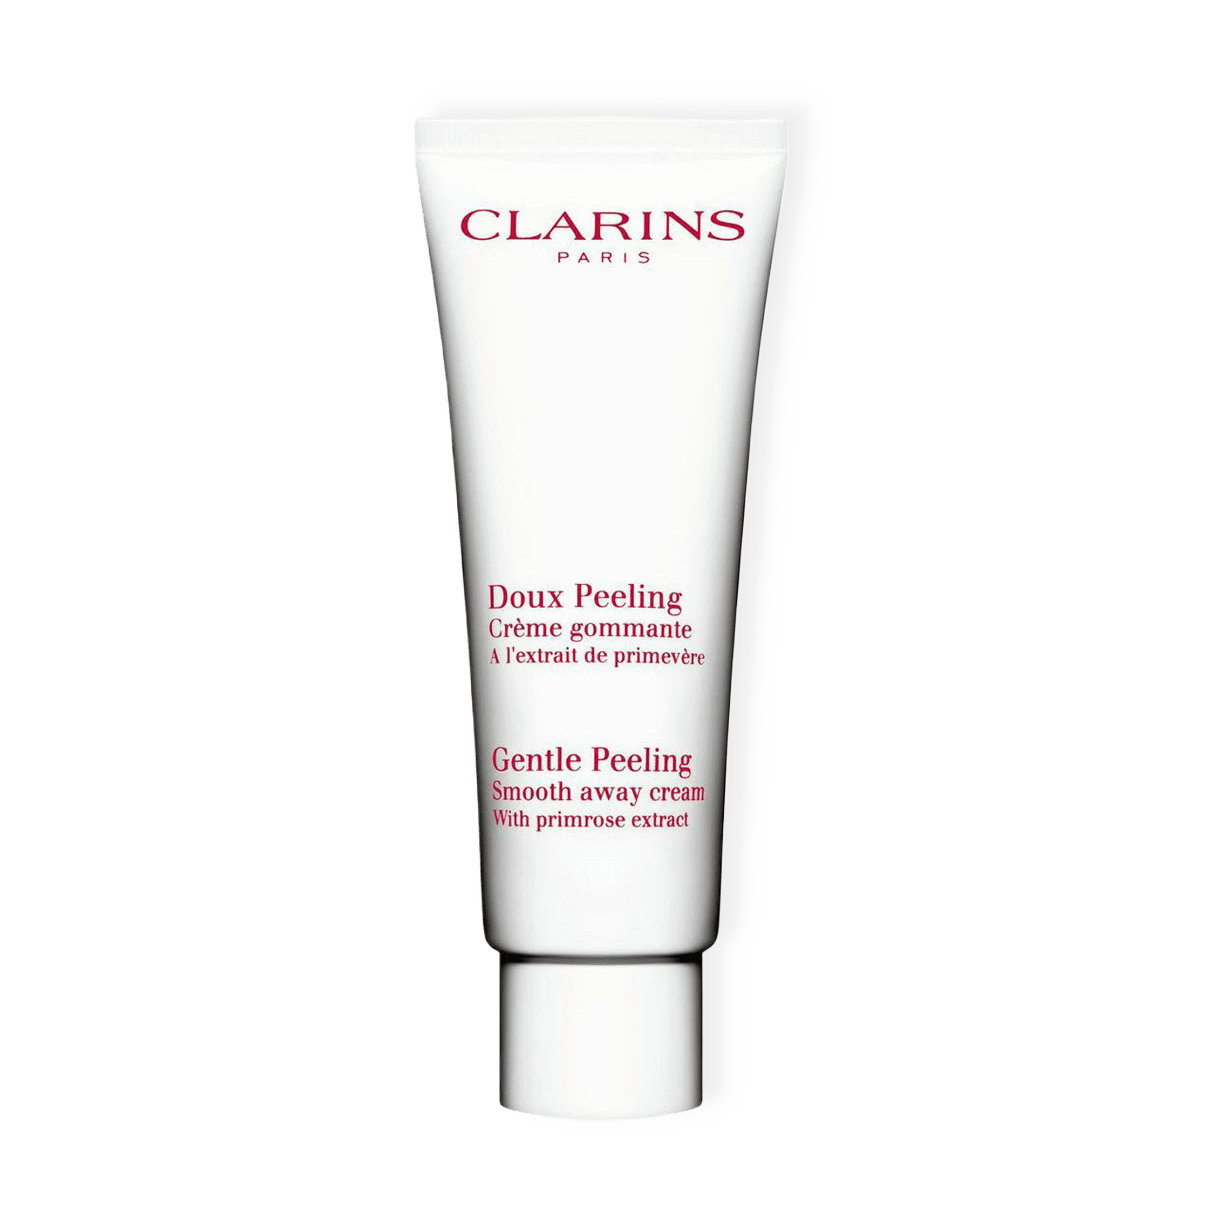 Gentle Peeling Smooth Away Cream, 50 ml från Clarins